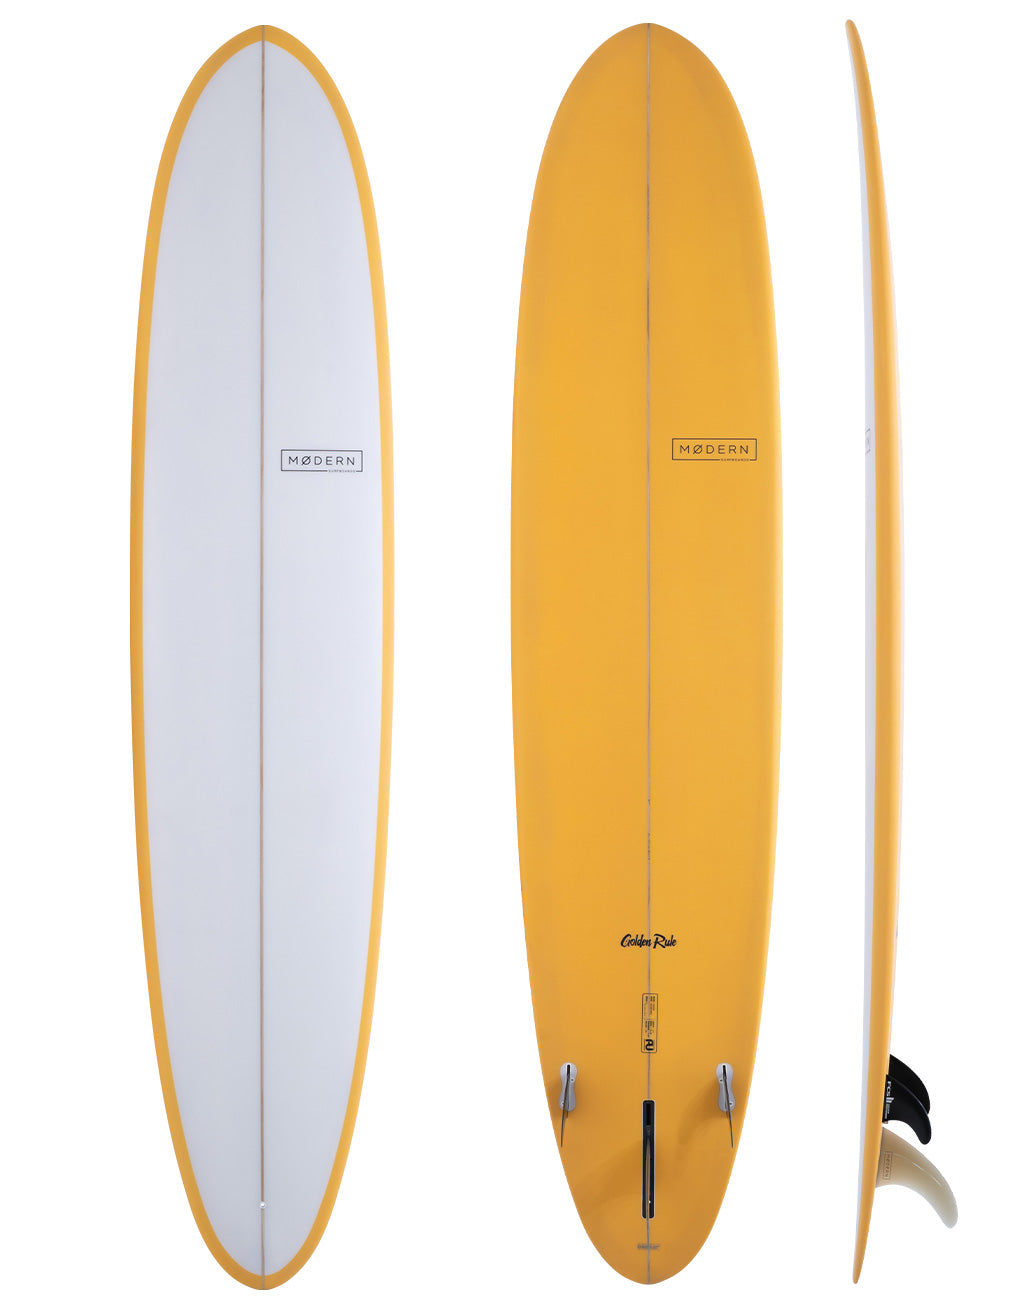 Modern Golden - PU - sunrise Global Surf Industries - USA